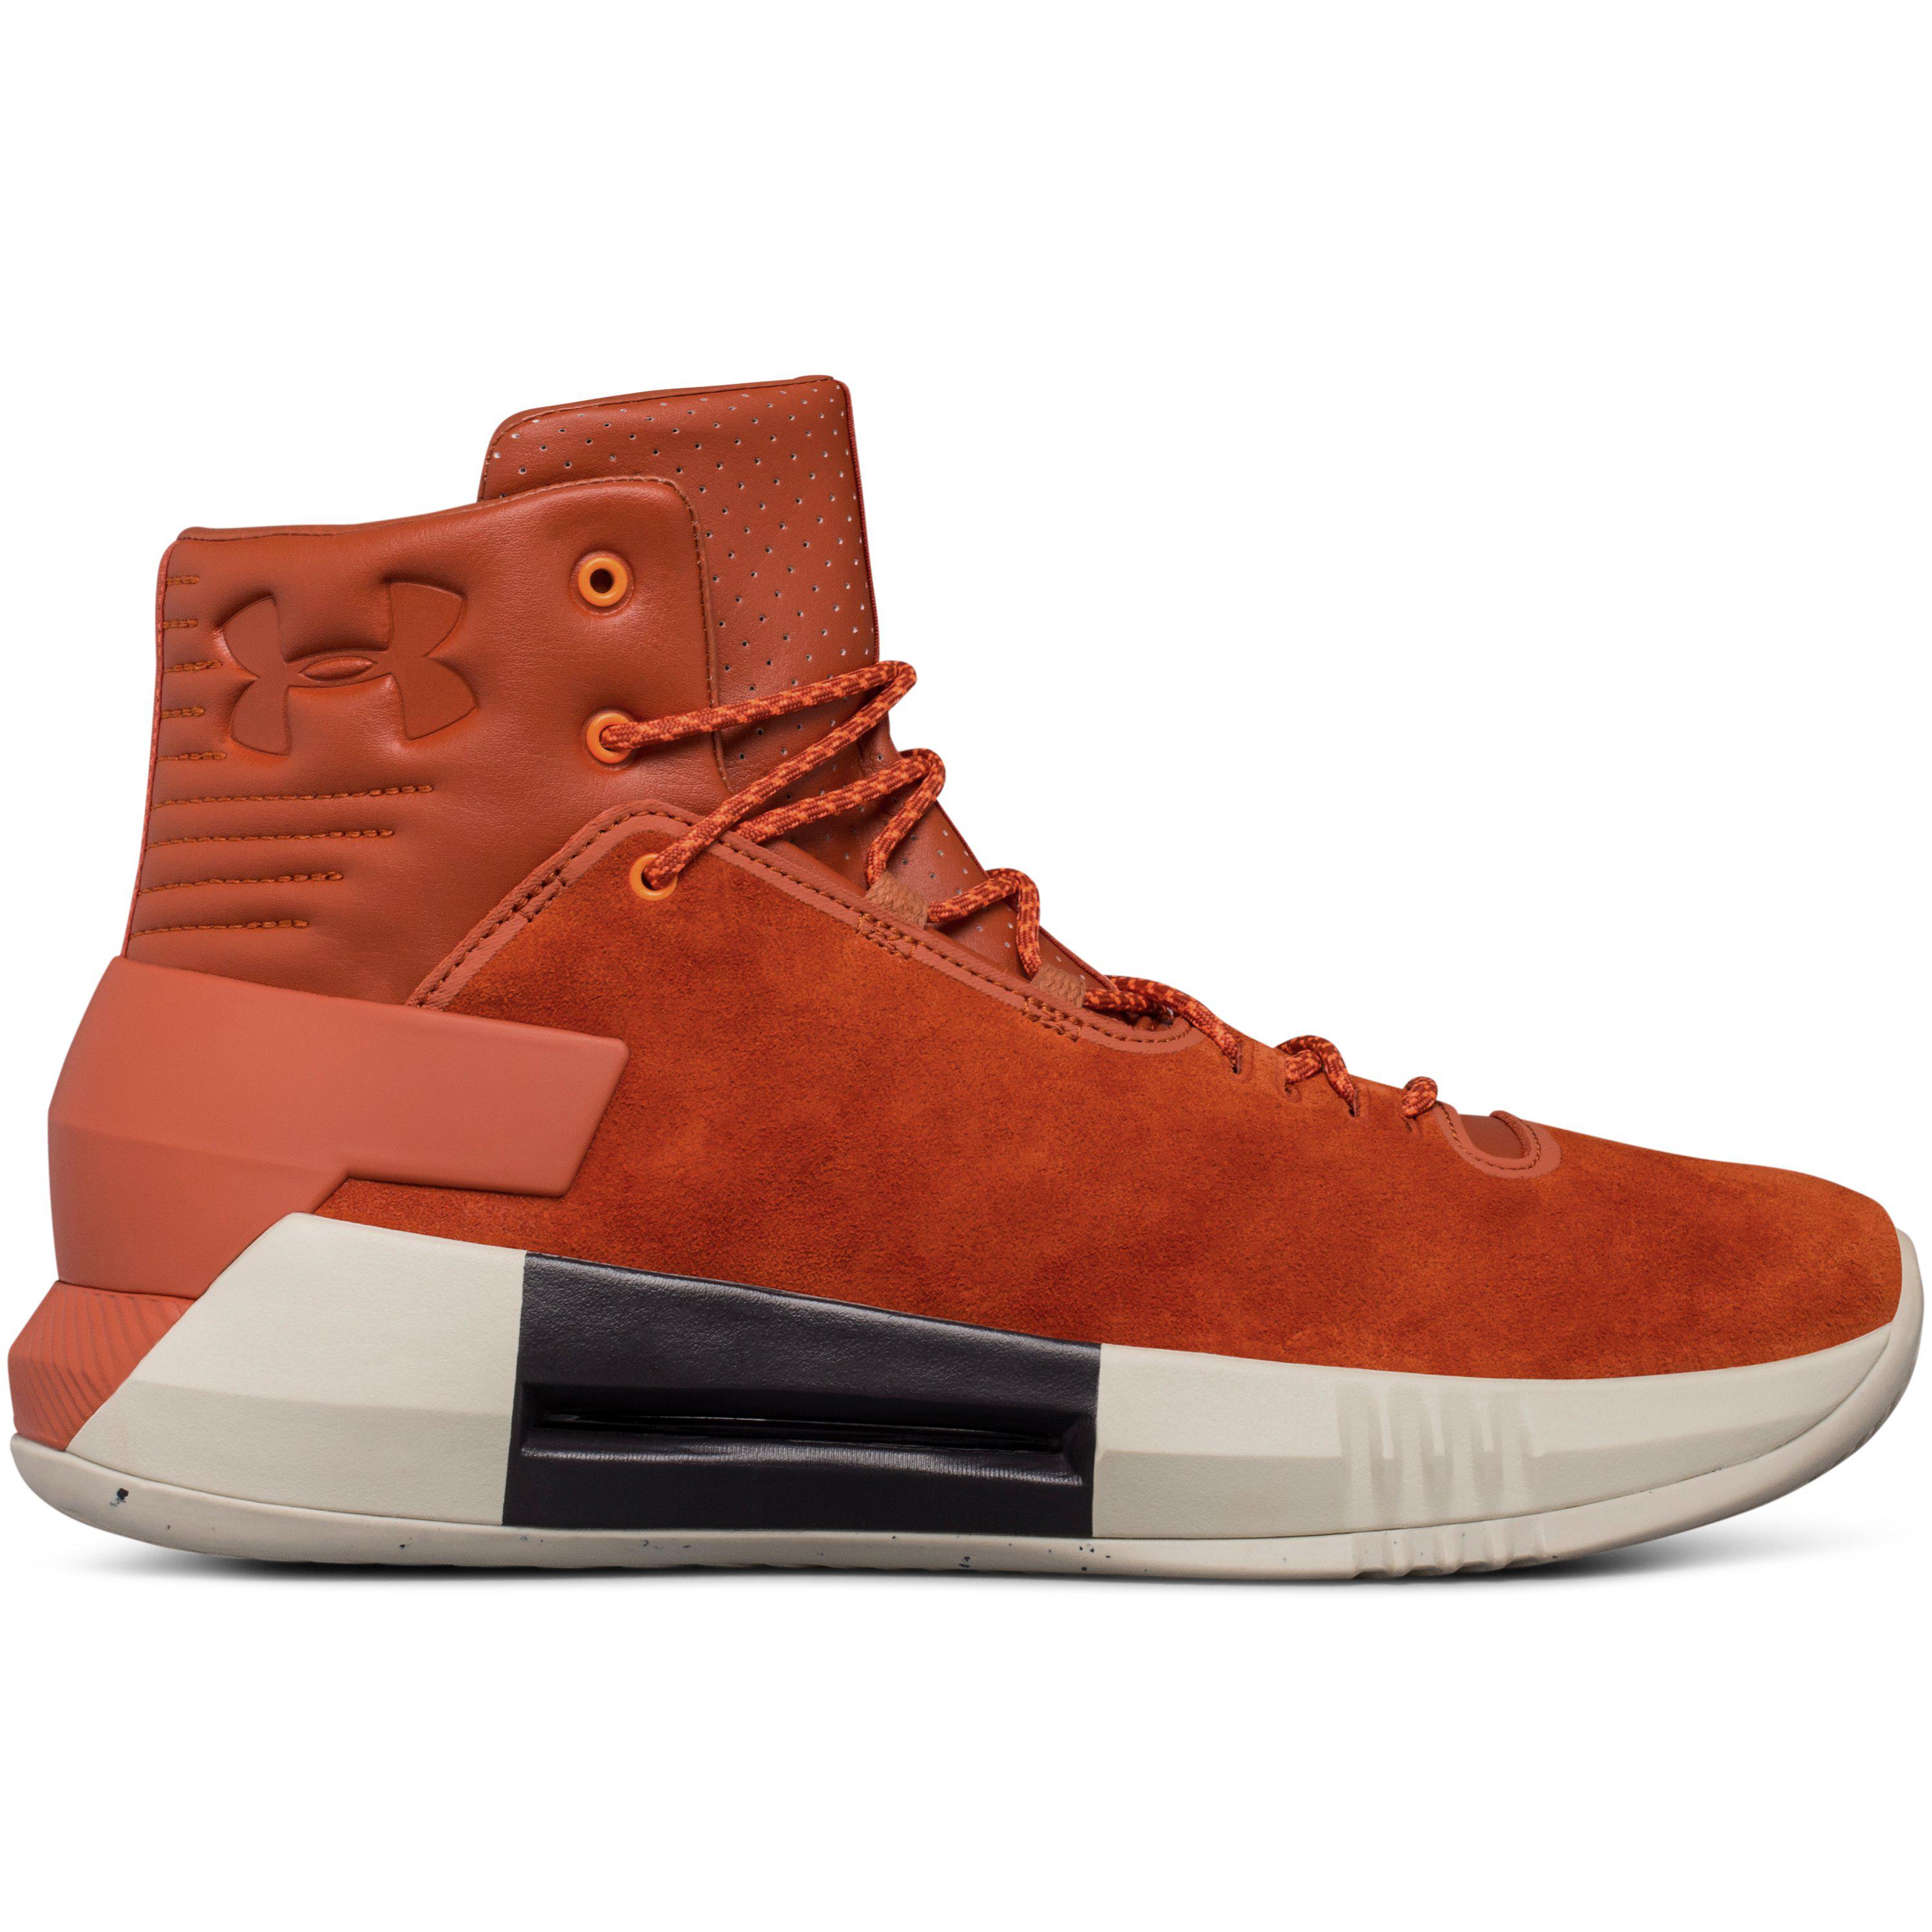 Under Armour Leather Men's Ua Drive 4 Premium Basketball Shoes for Men -  Lyst